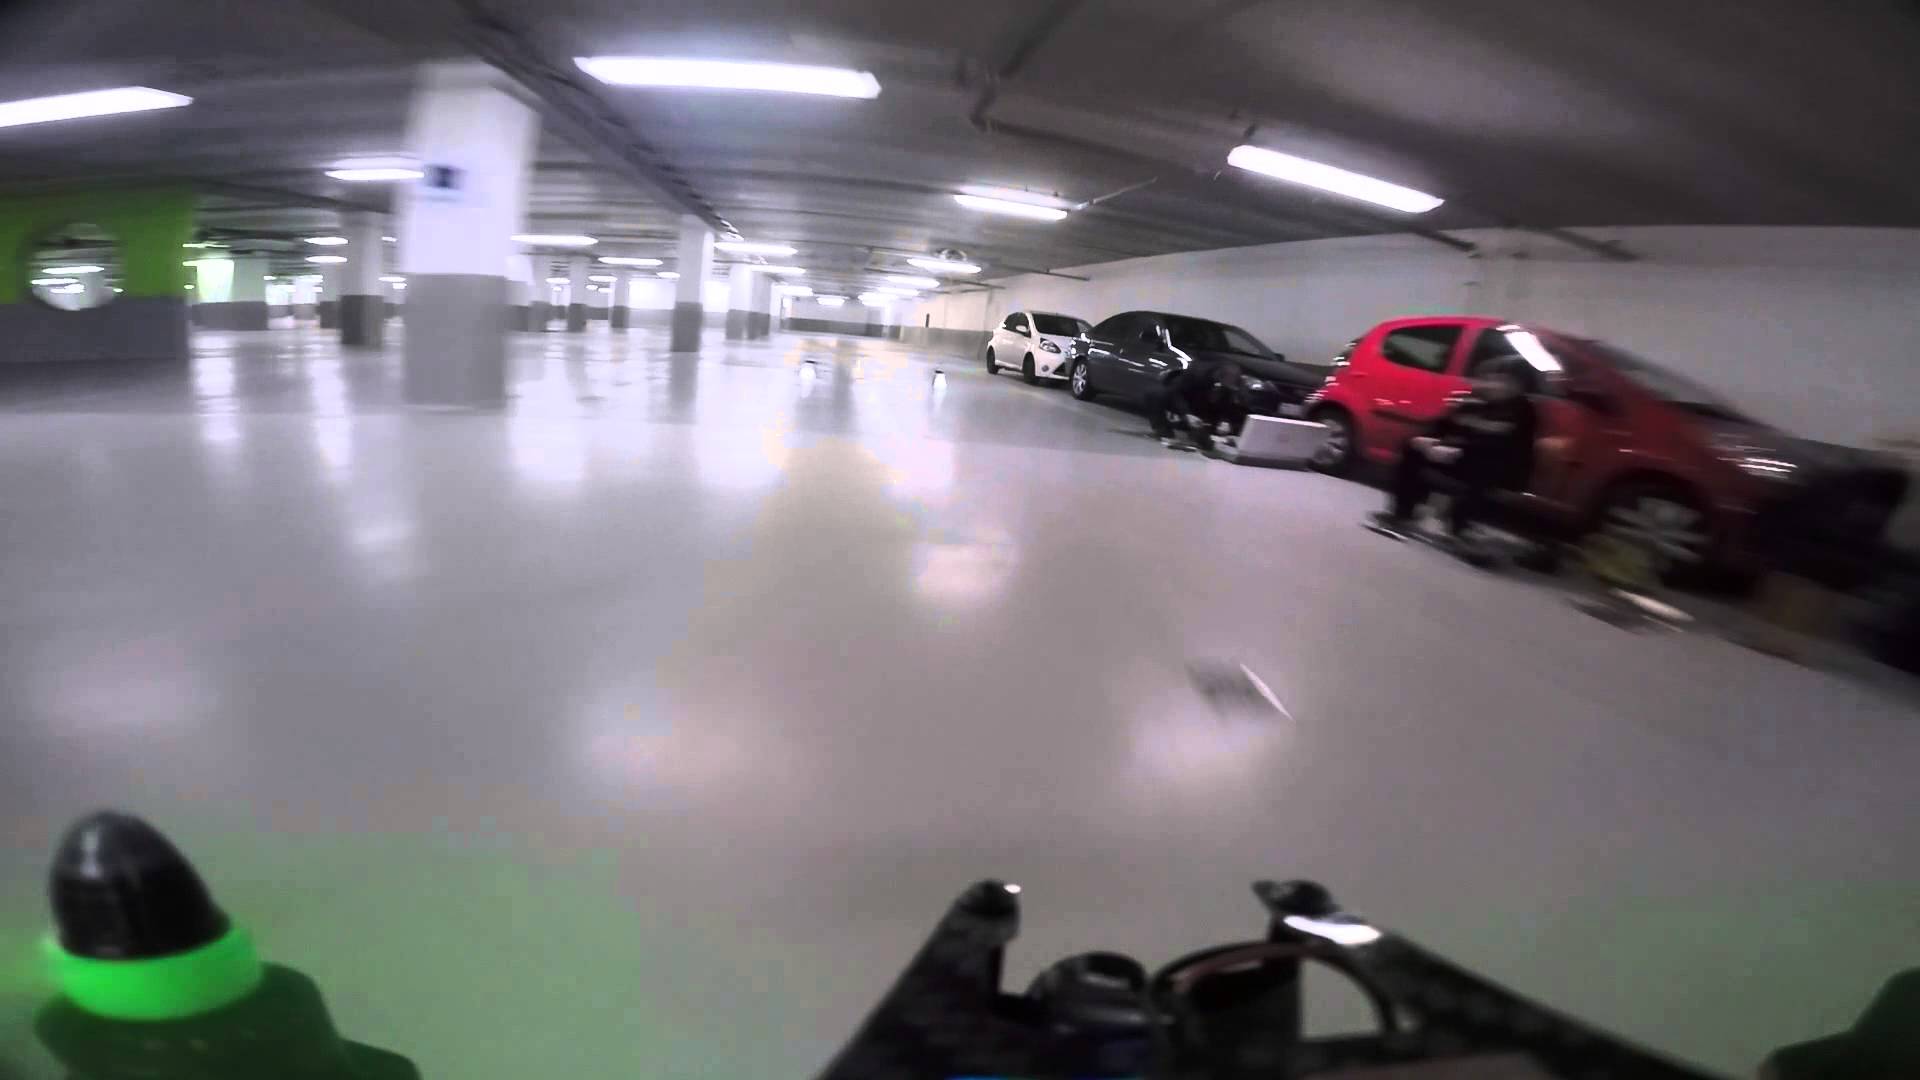 FPV – Carpark Drone racing